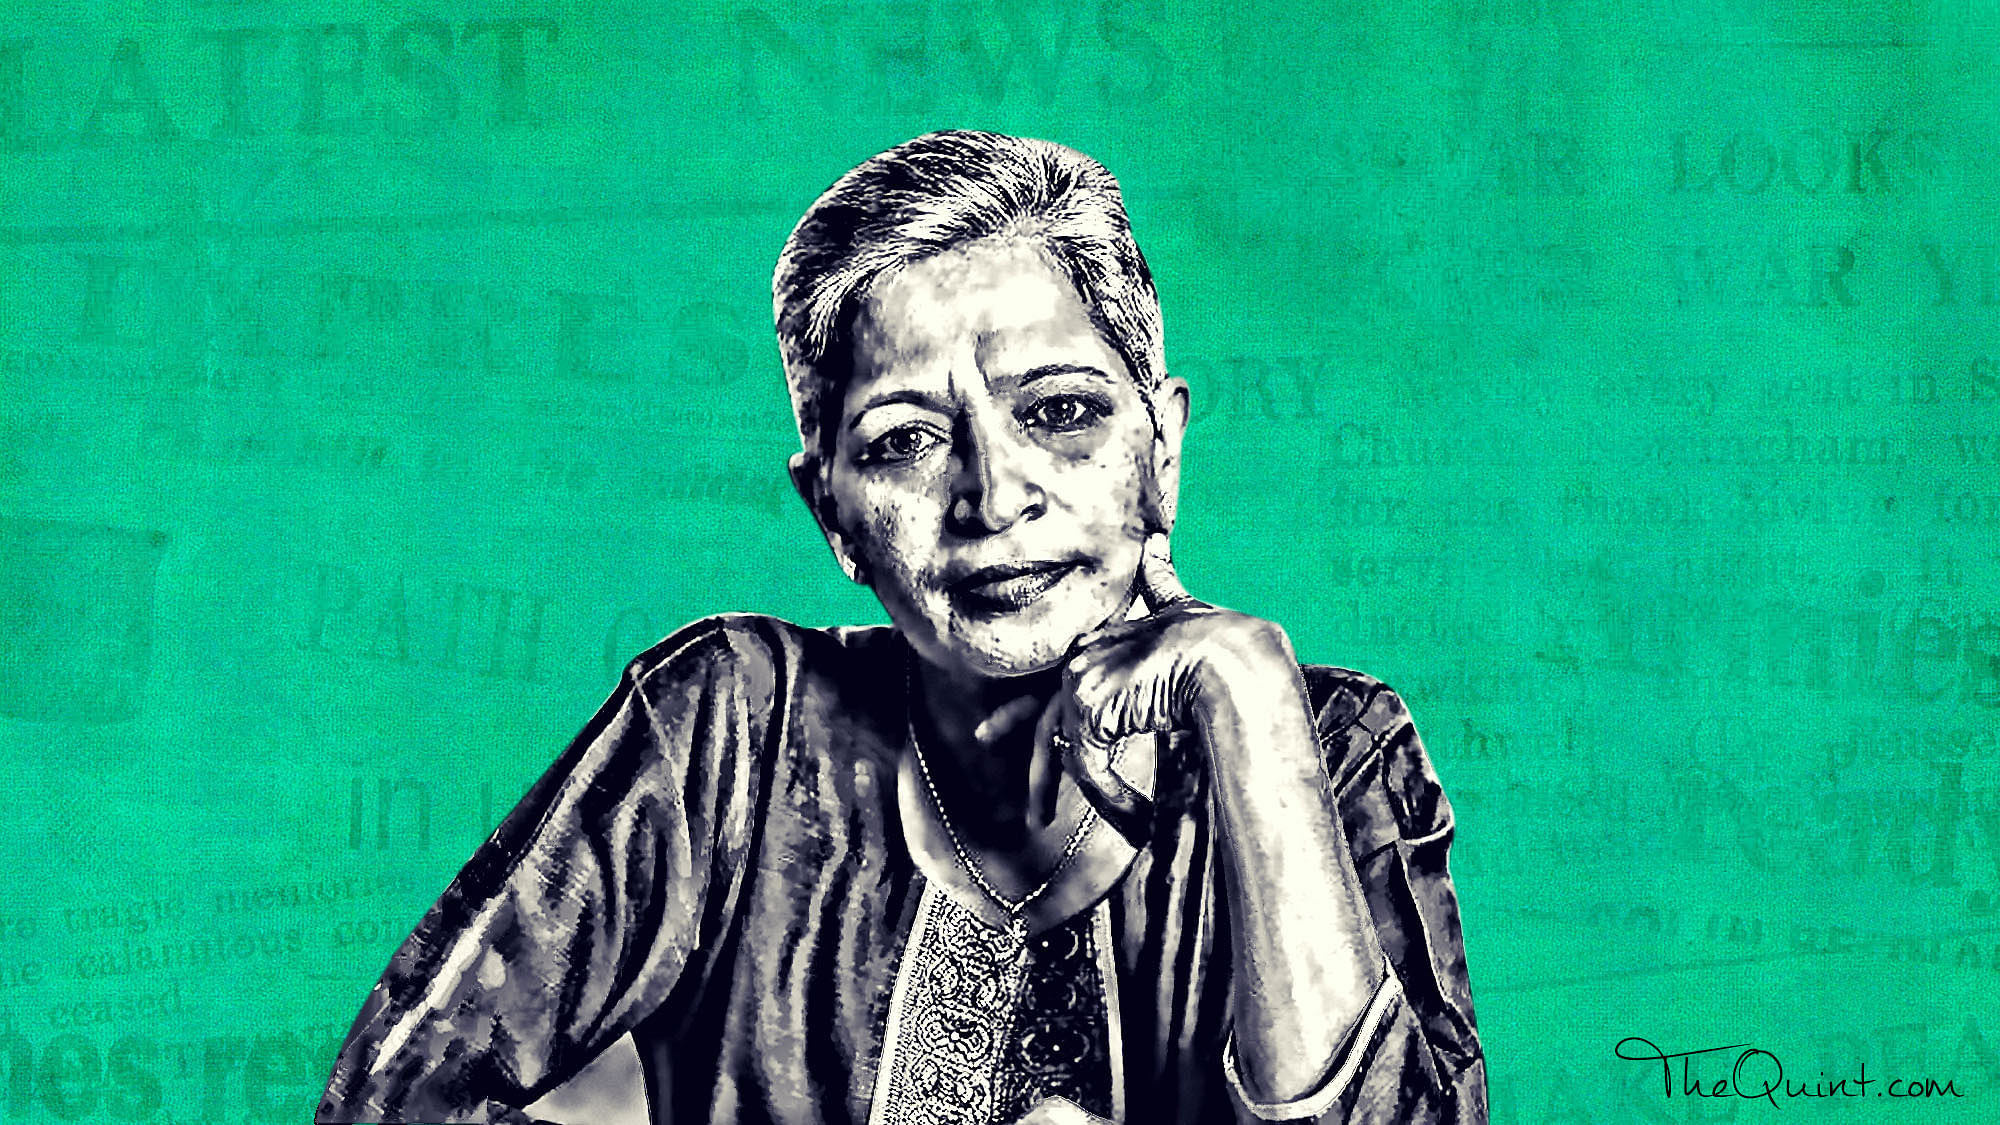 Gauri Lankesh was killed outside her home in Bengaluru on 5 September.